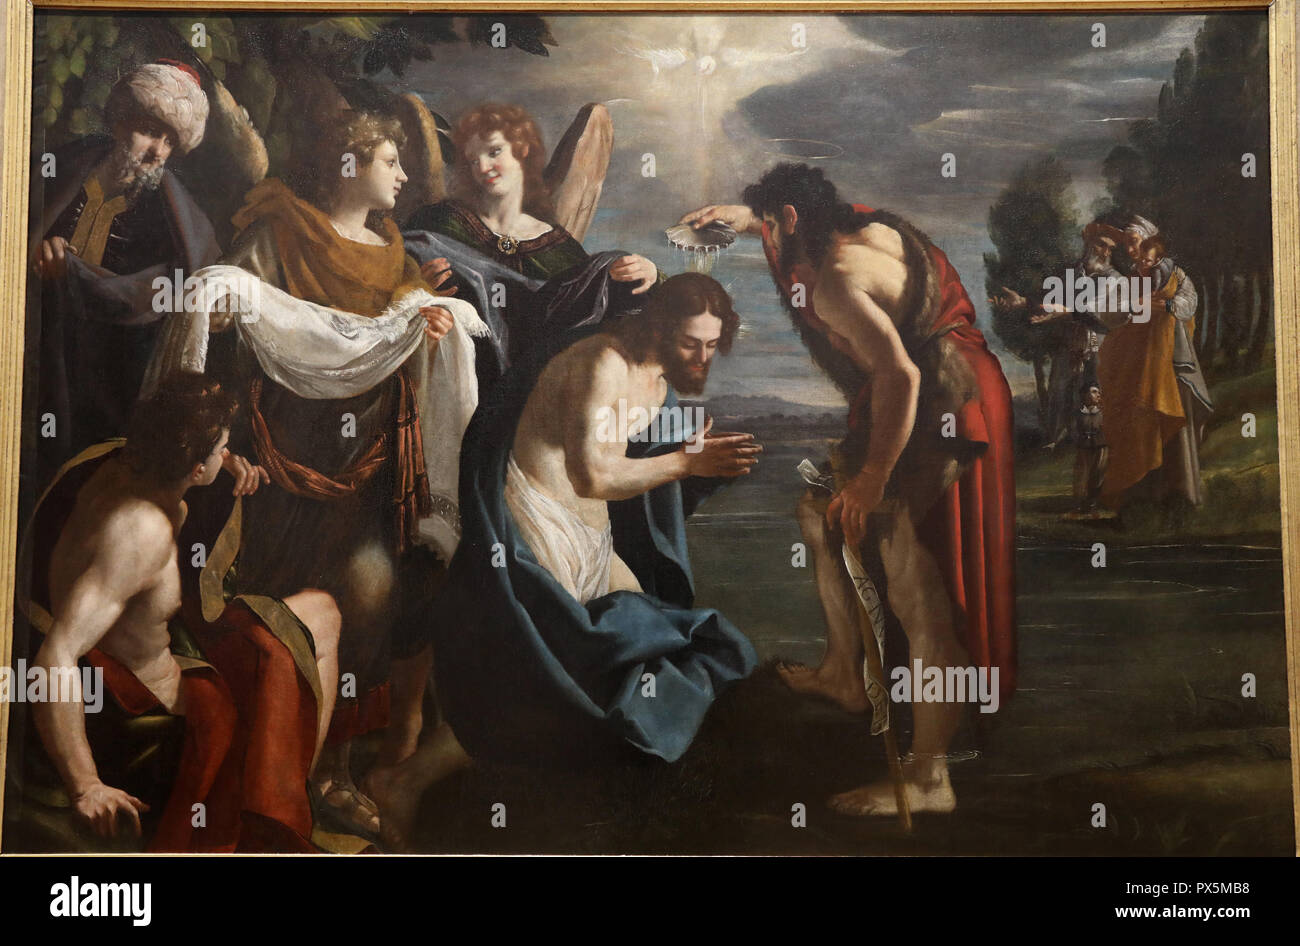 Religious Art Guido Reni Fine Art Print Baptism of Christ